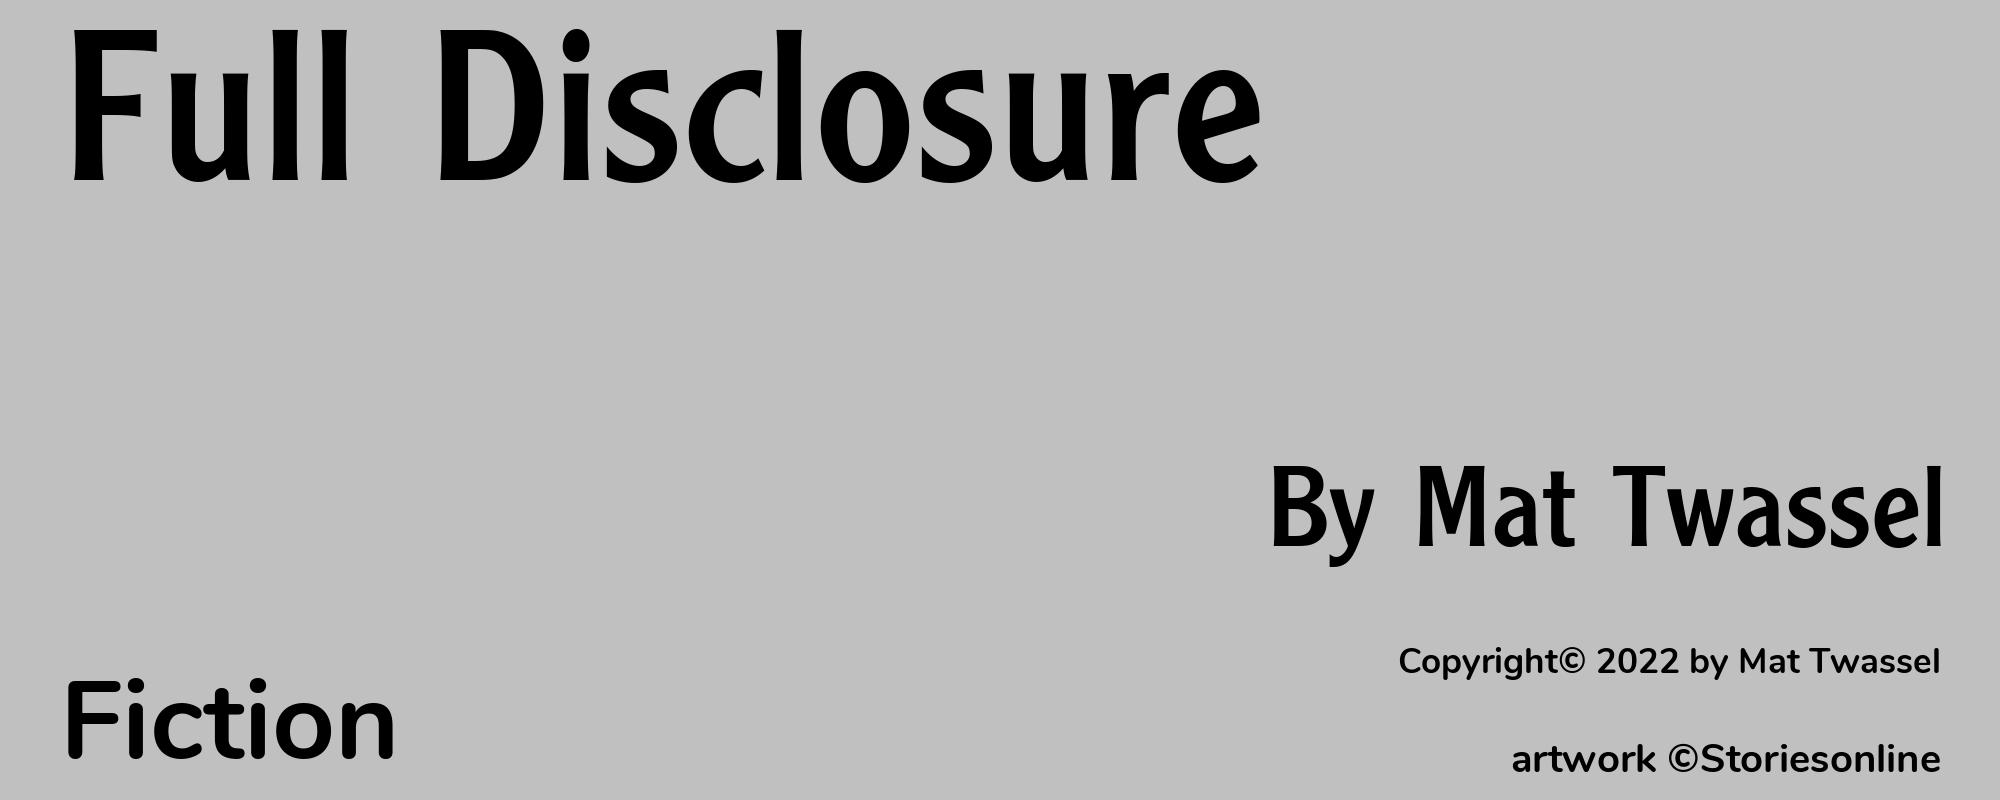 Full Disclosure - Cover